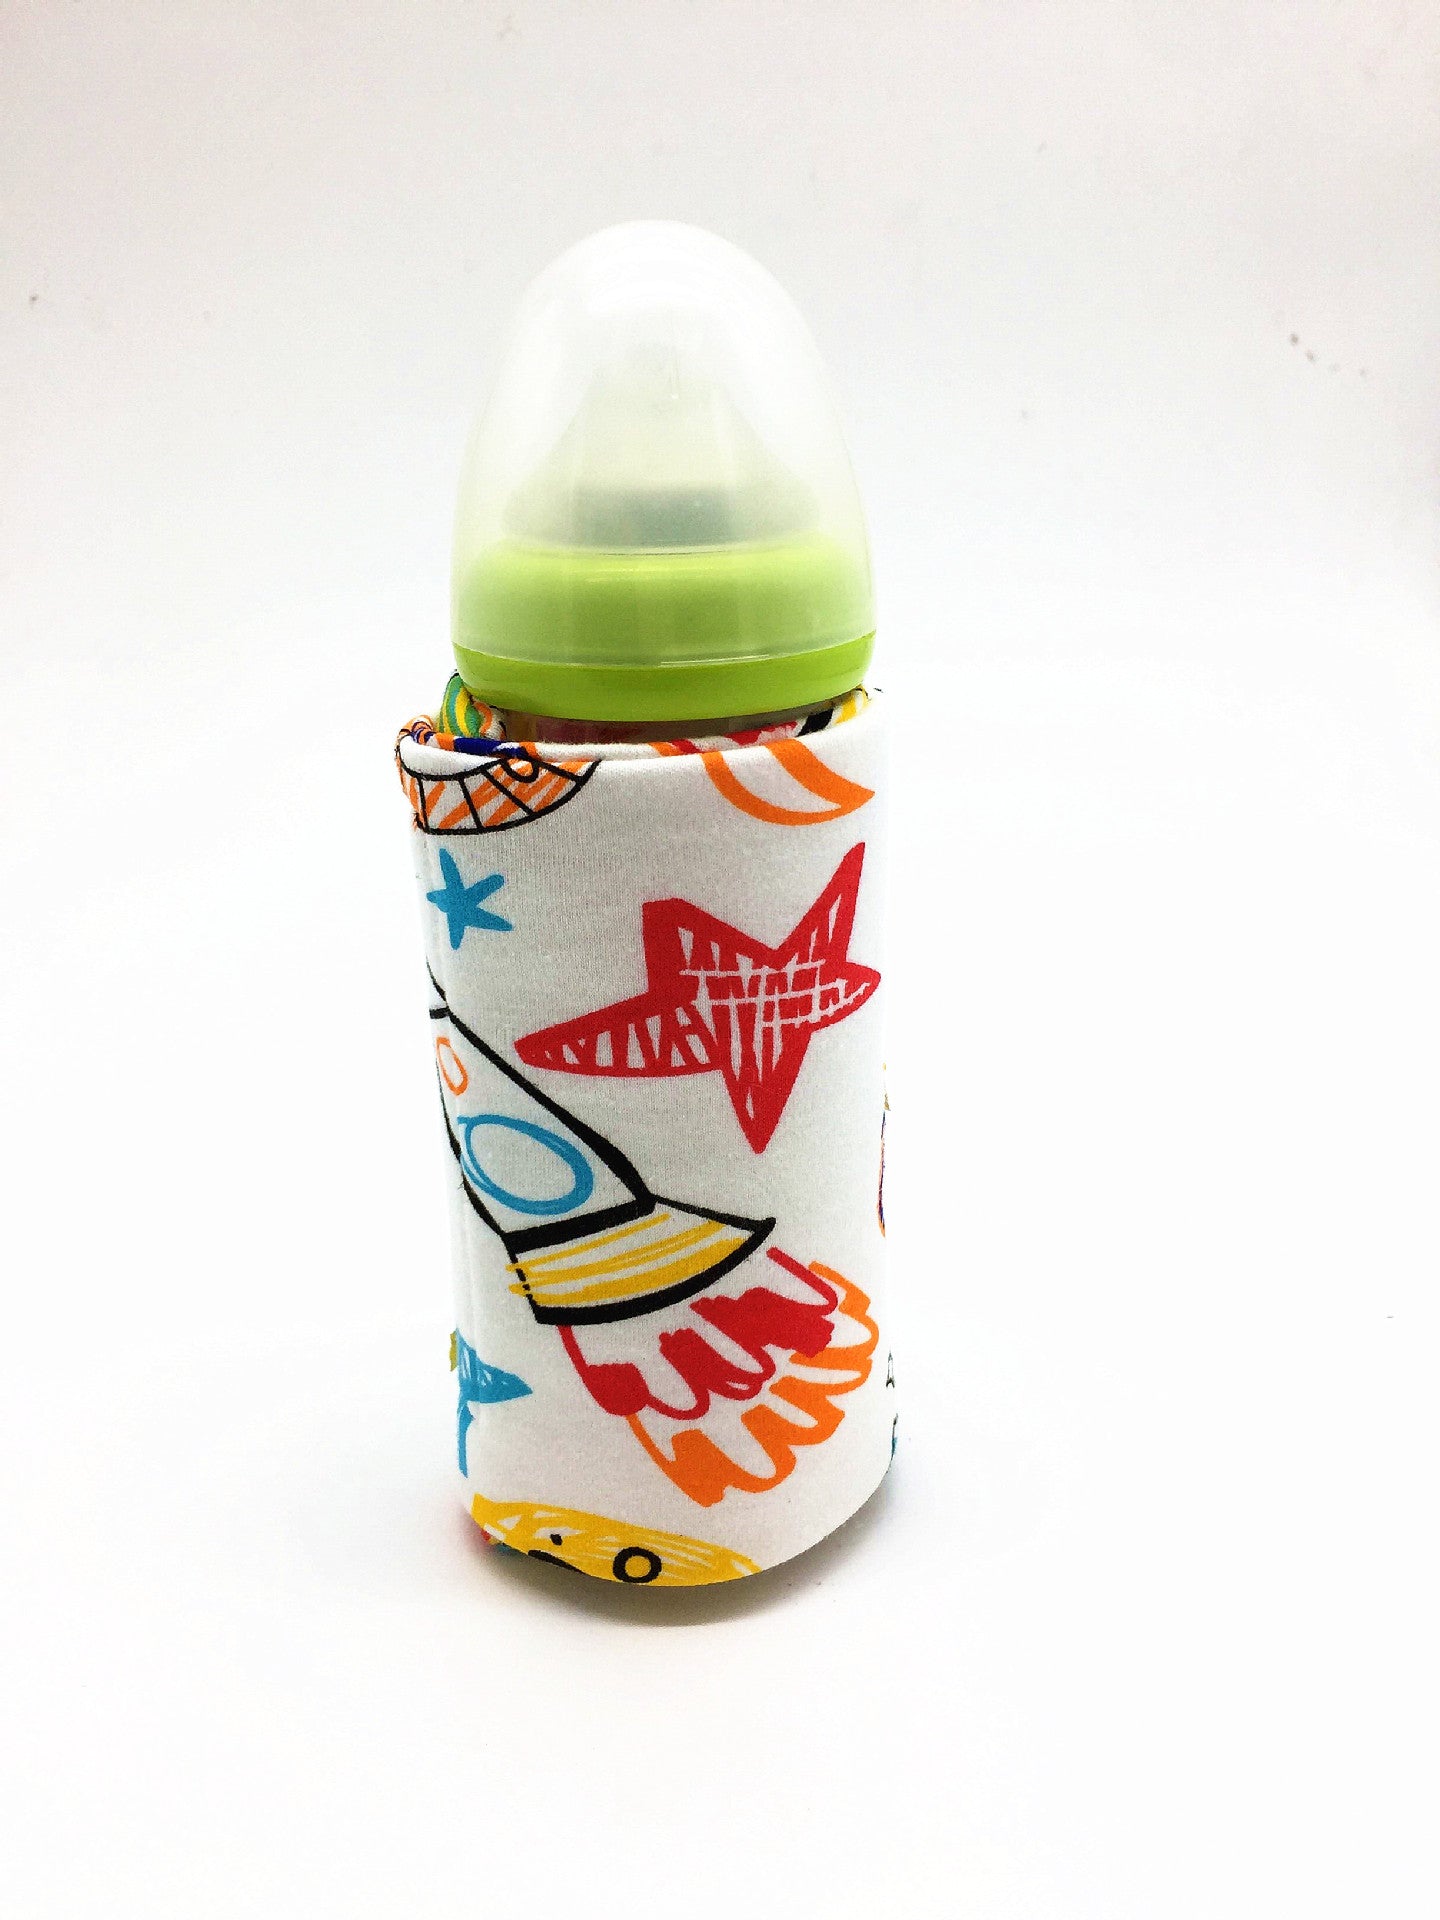 USB Milk Water Warmer Travel Stroller Insulated Bag Portable Baby Nursing Bottle Heater Cover Baby Food Warmer Bottle Warmer.